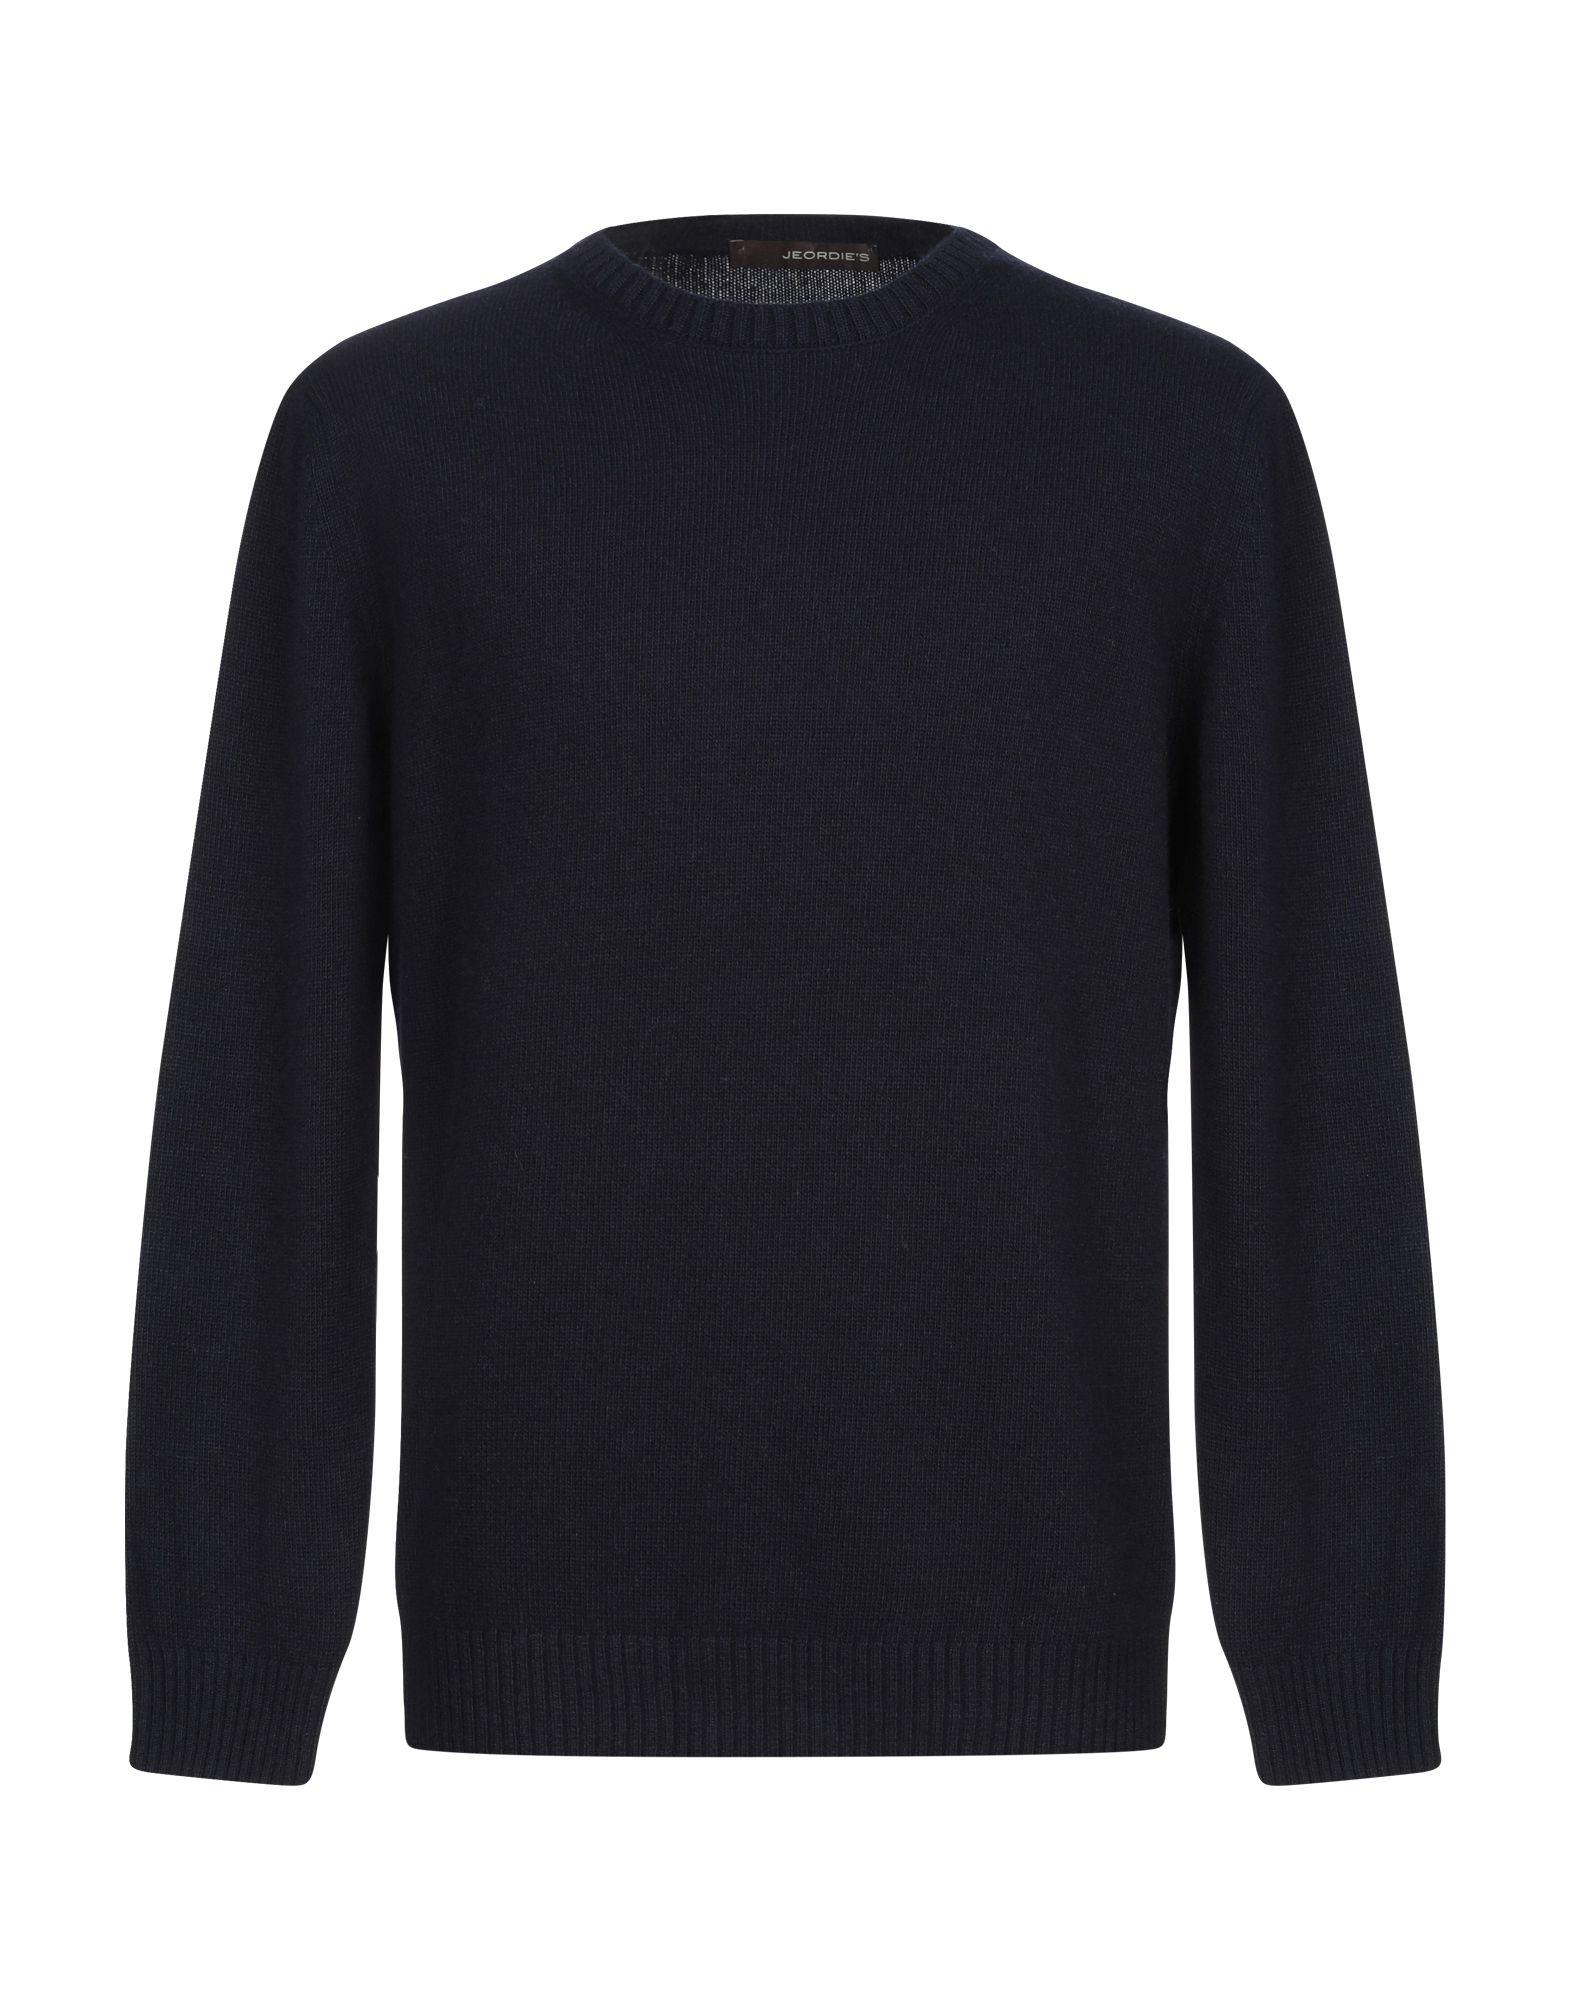 Jeordie's Wool Sweater in Dark Blue (Blue) for Men - Lyst